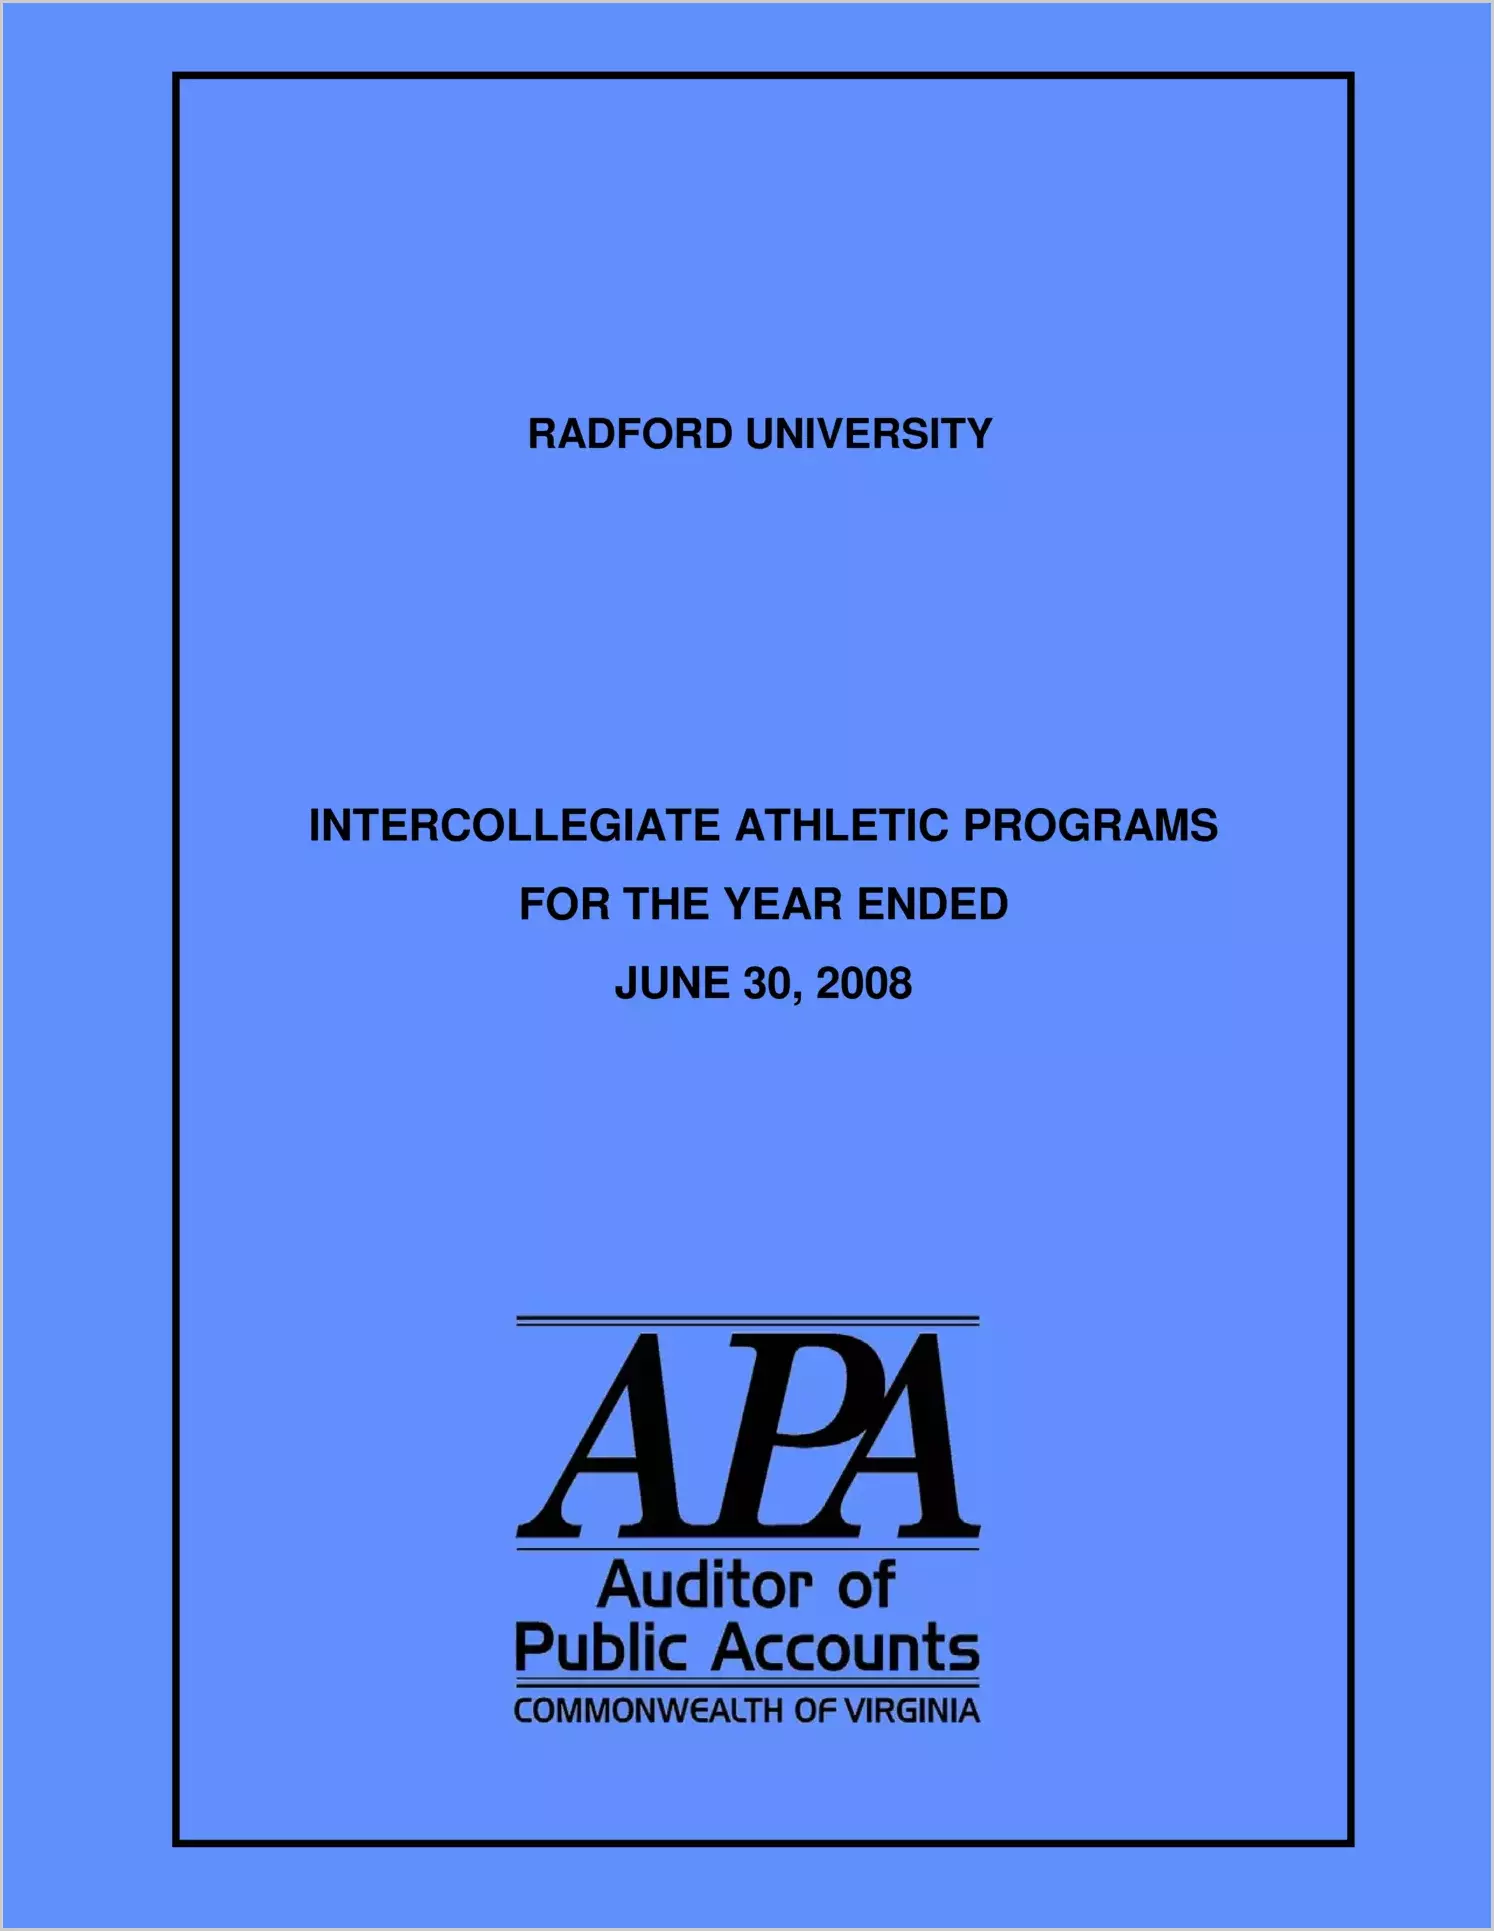 Radford University Intercollegiate Athletics Programs for the year ended June 30, 2008